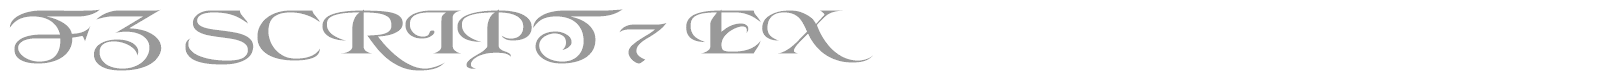 FZ SCRIPT 7 EX font preview